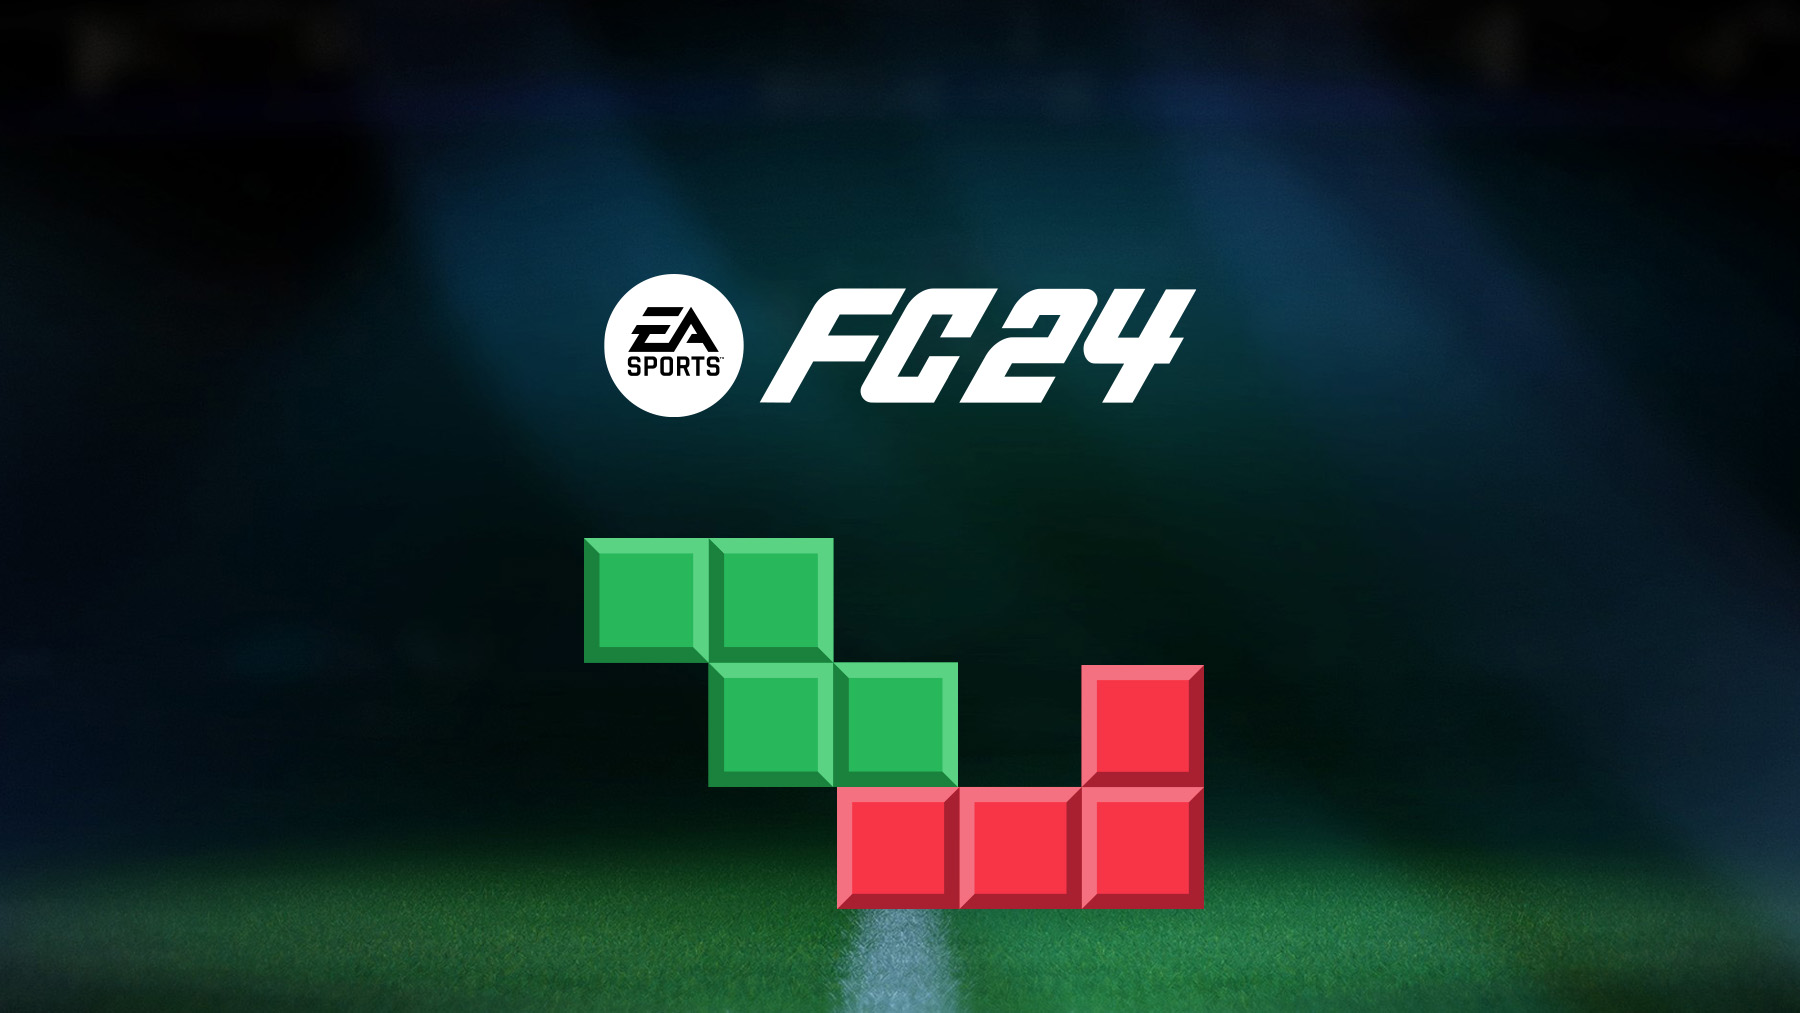 FC 24 and Tetris